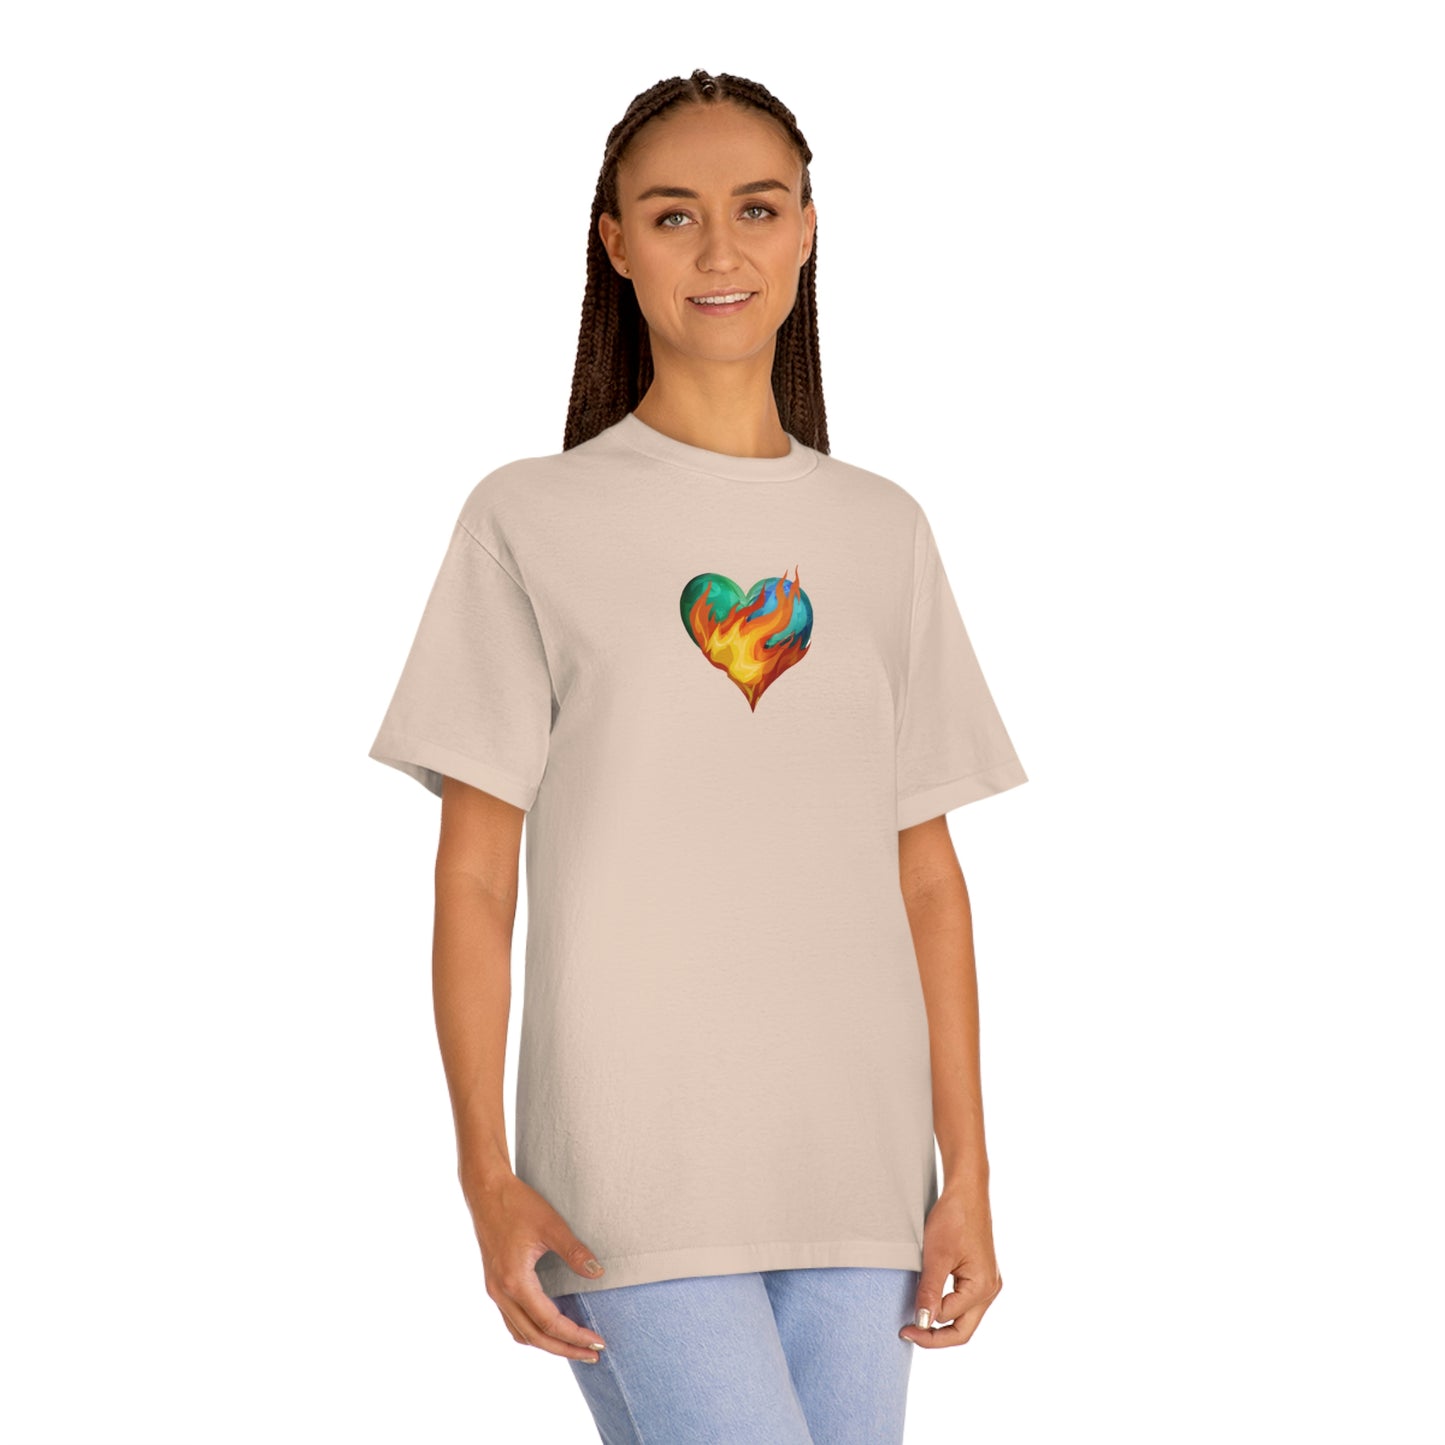 Defined Life "Heart on Fire" Unisex T-Shirt